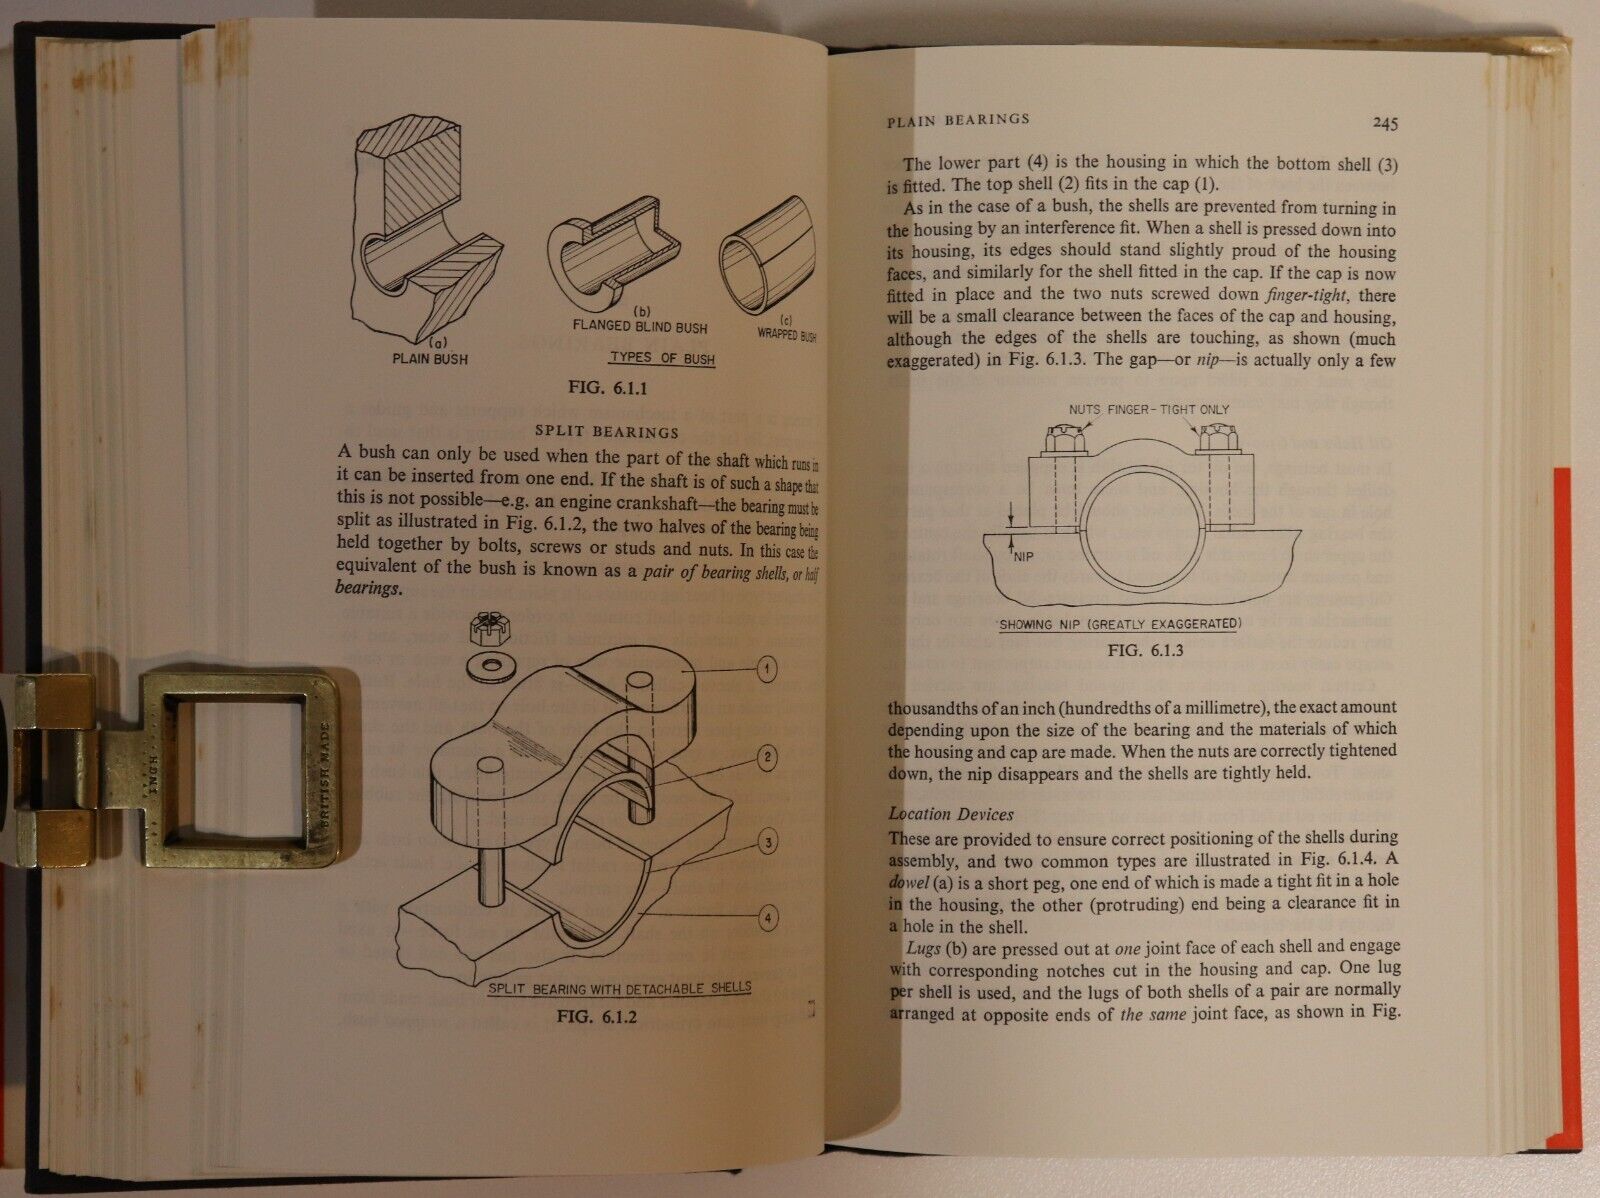 Fundamentals Of Motor Vehicle Technology - 1972 - Vintage Automotive Book